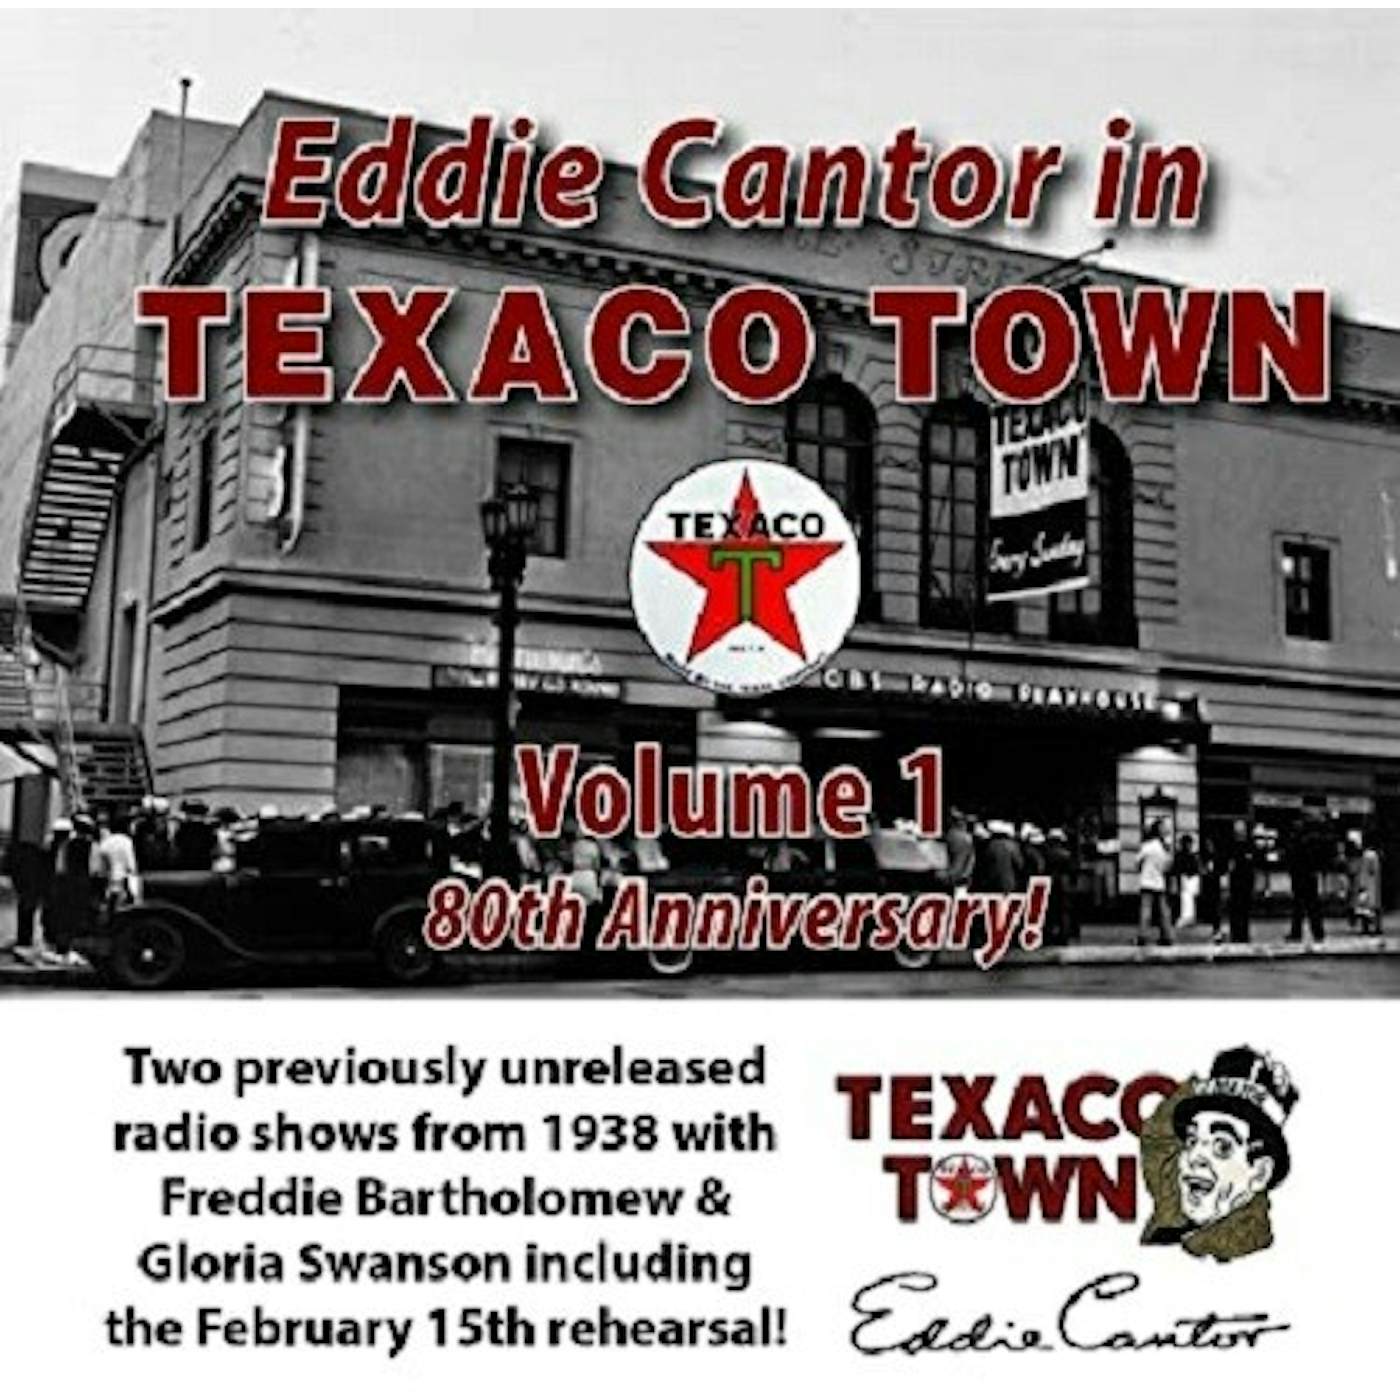 Eddie Cantor TEXACO TOWN CD